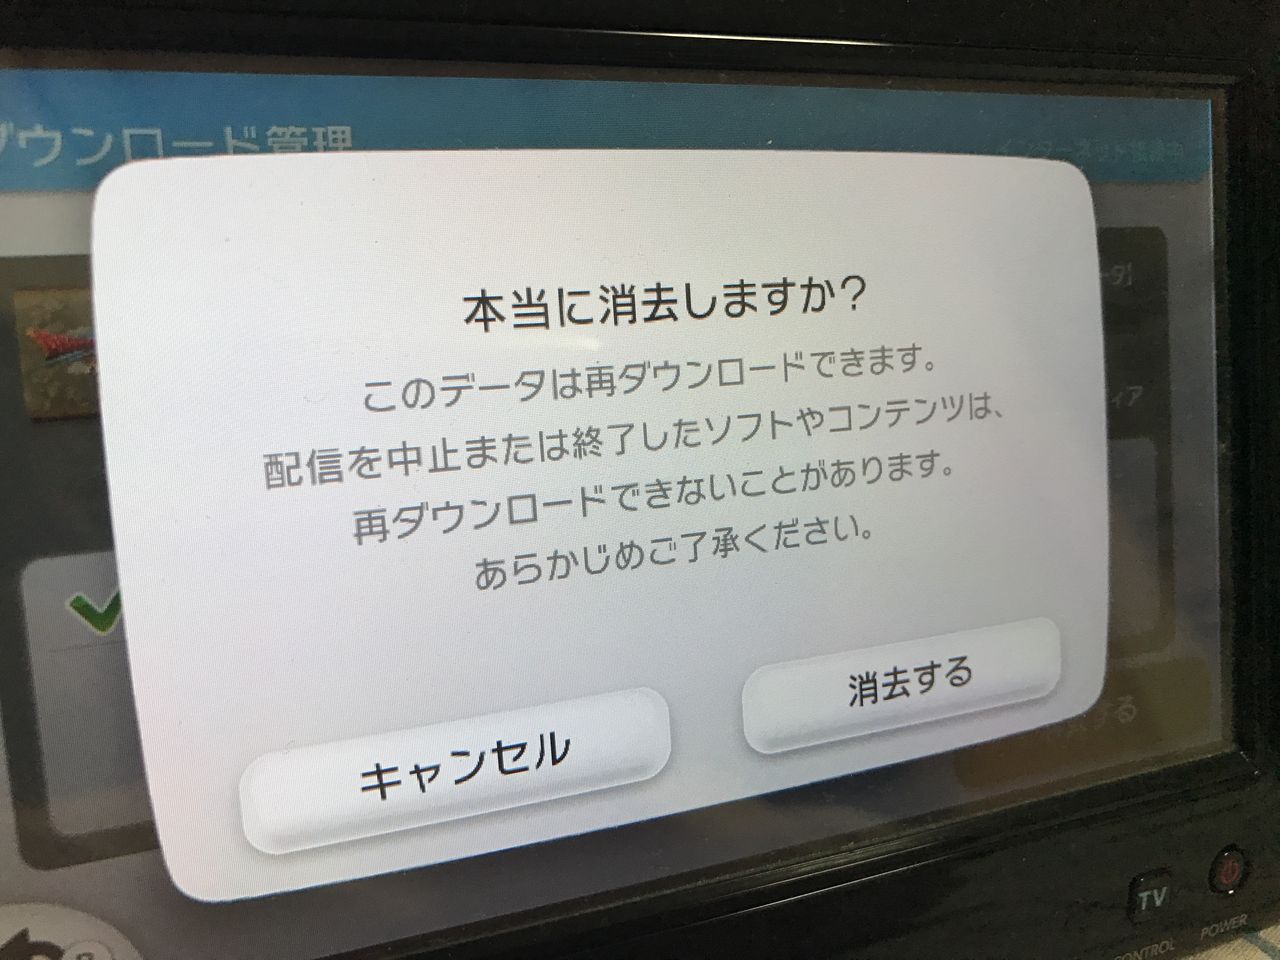 Wiiuのusbメモリの空き容量が足りない時の対処法 東京ドワーフ